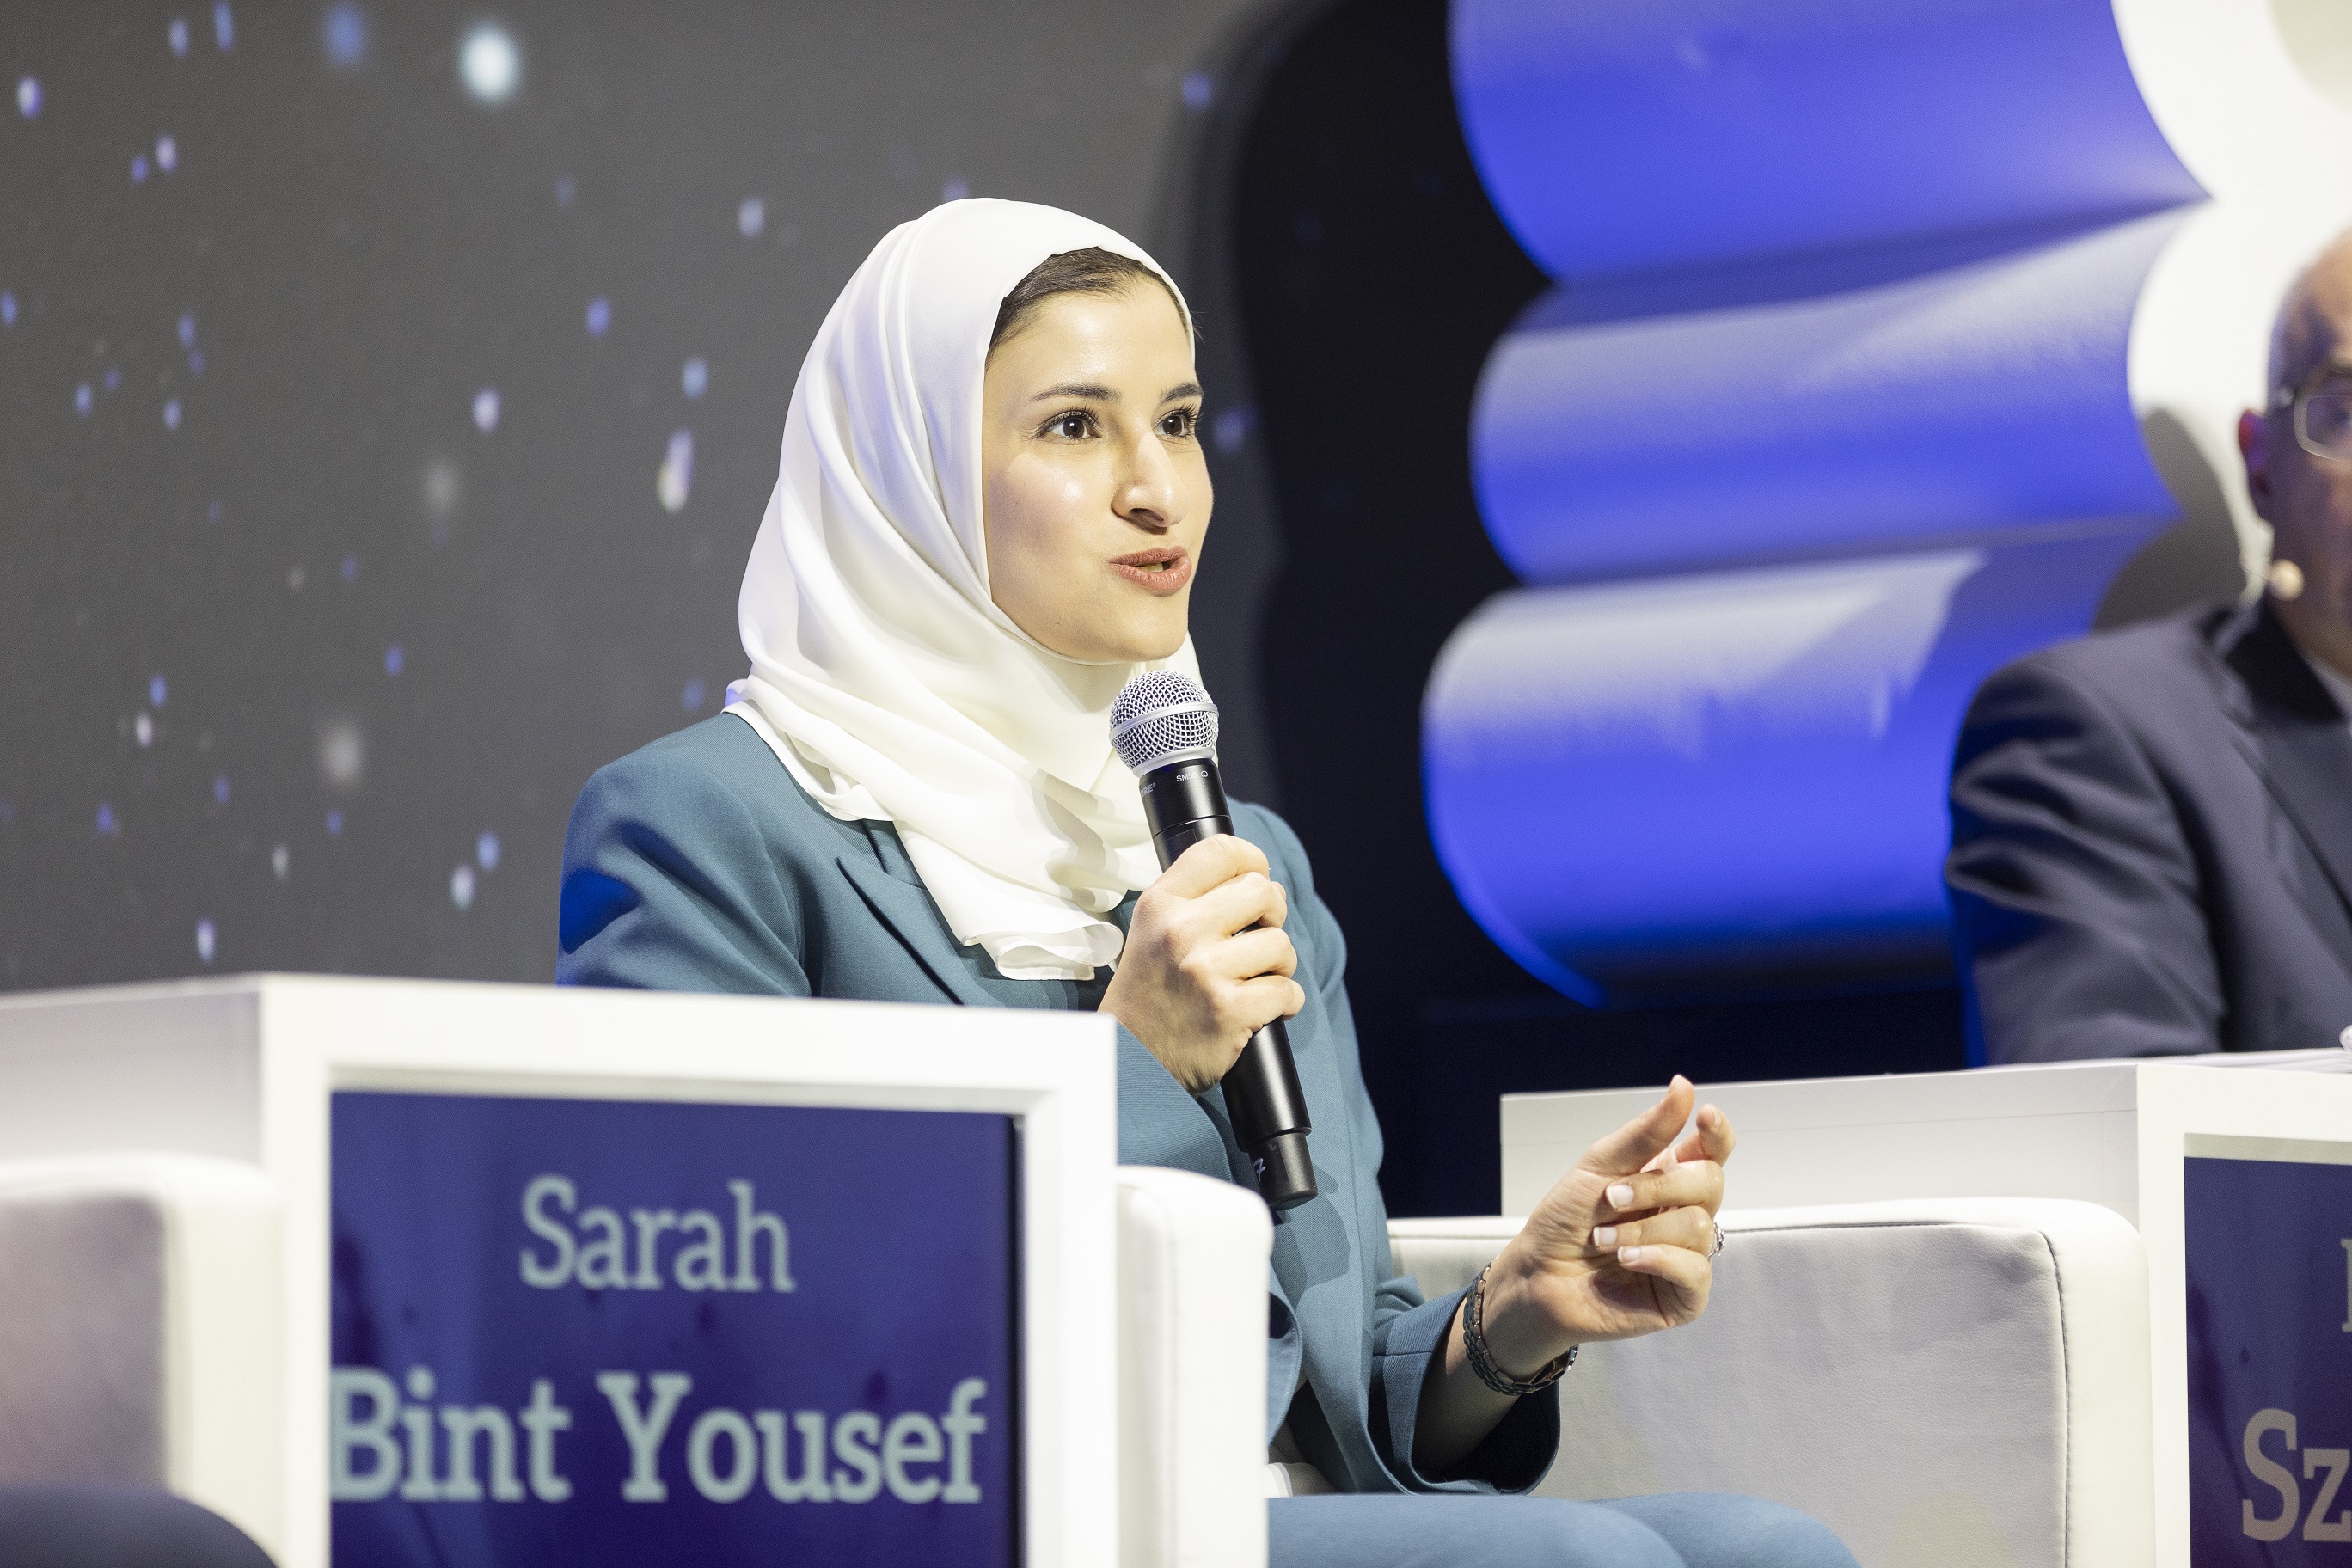 Her Excellency Sarah Al Amiri leads UAE delegation to Switzerland, discusses science diplomacy, quantum technologies